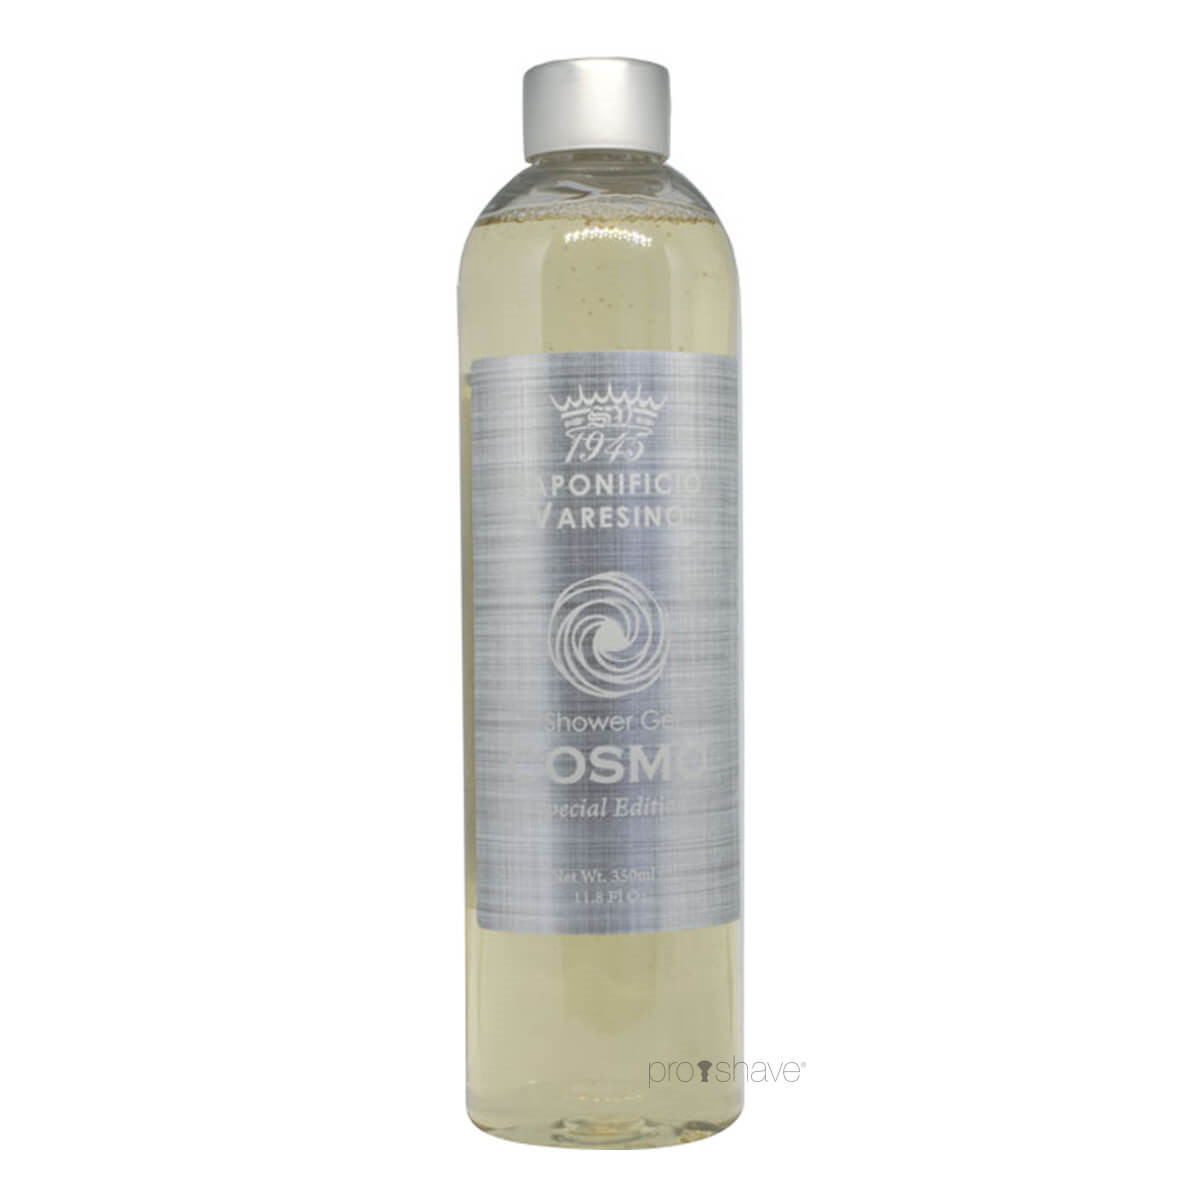 Se Saponificio Varesino Shower Gel, Cosmo, 350 ml. hos Proshave